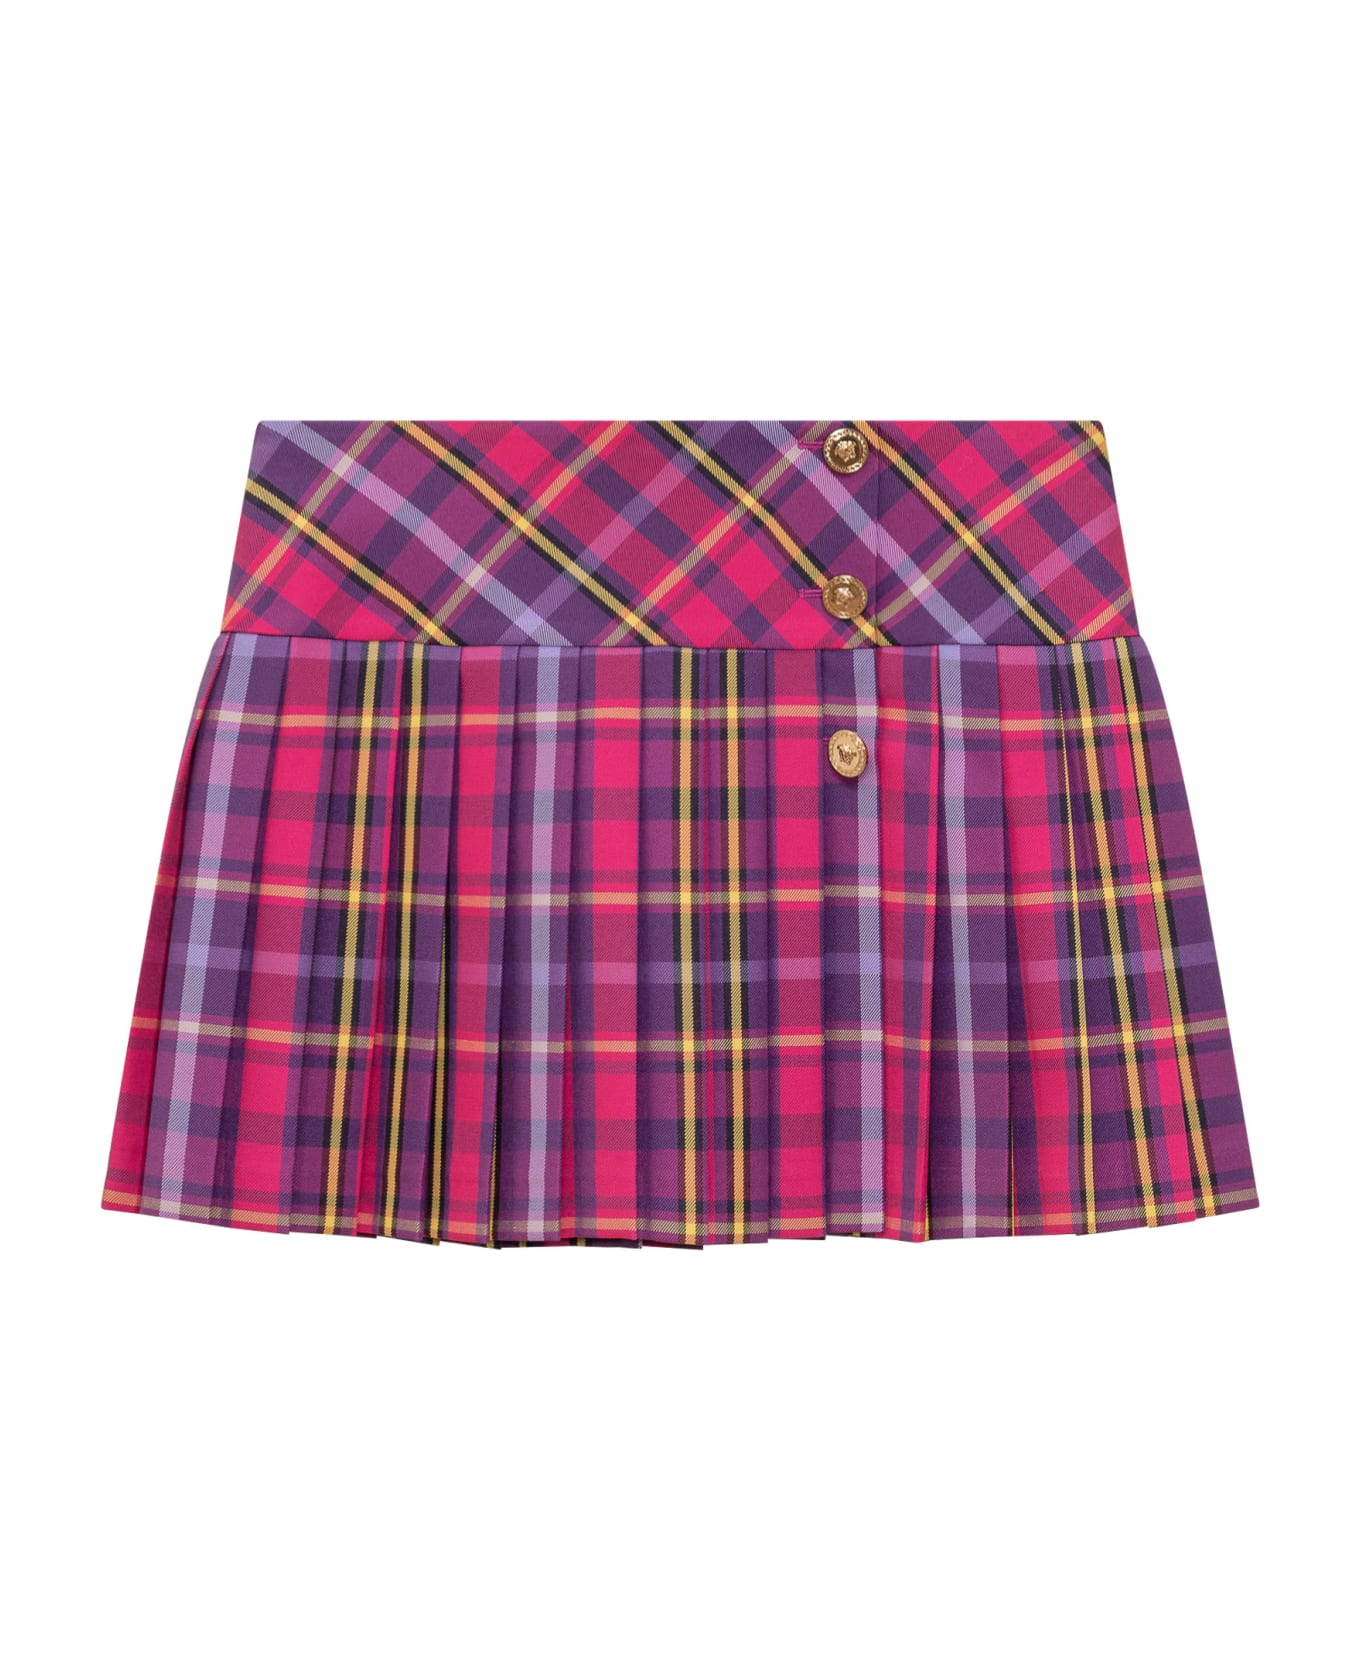 Versace Tartan Skirt - FUXIA-PURPLE-YELLOW